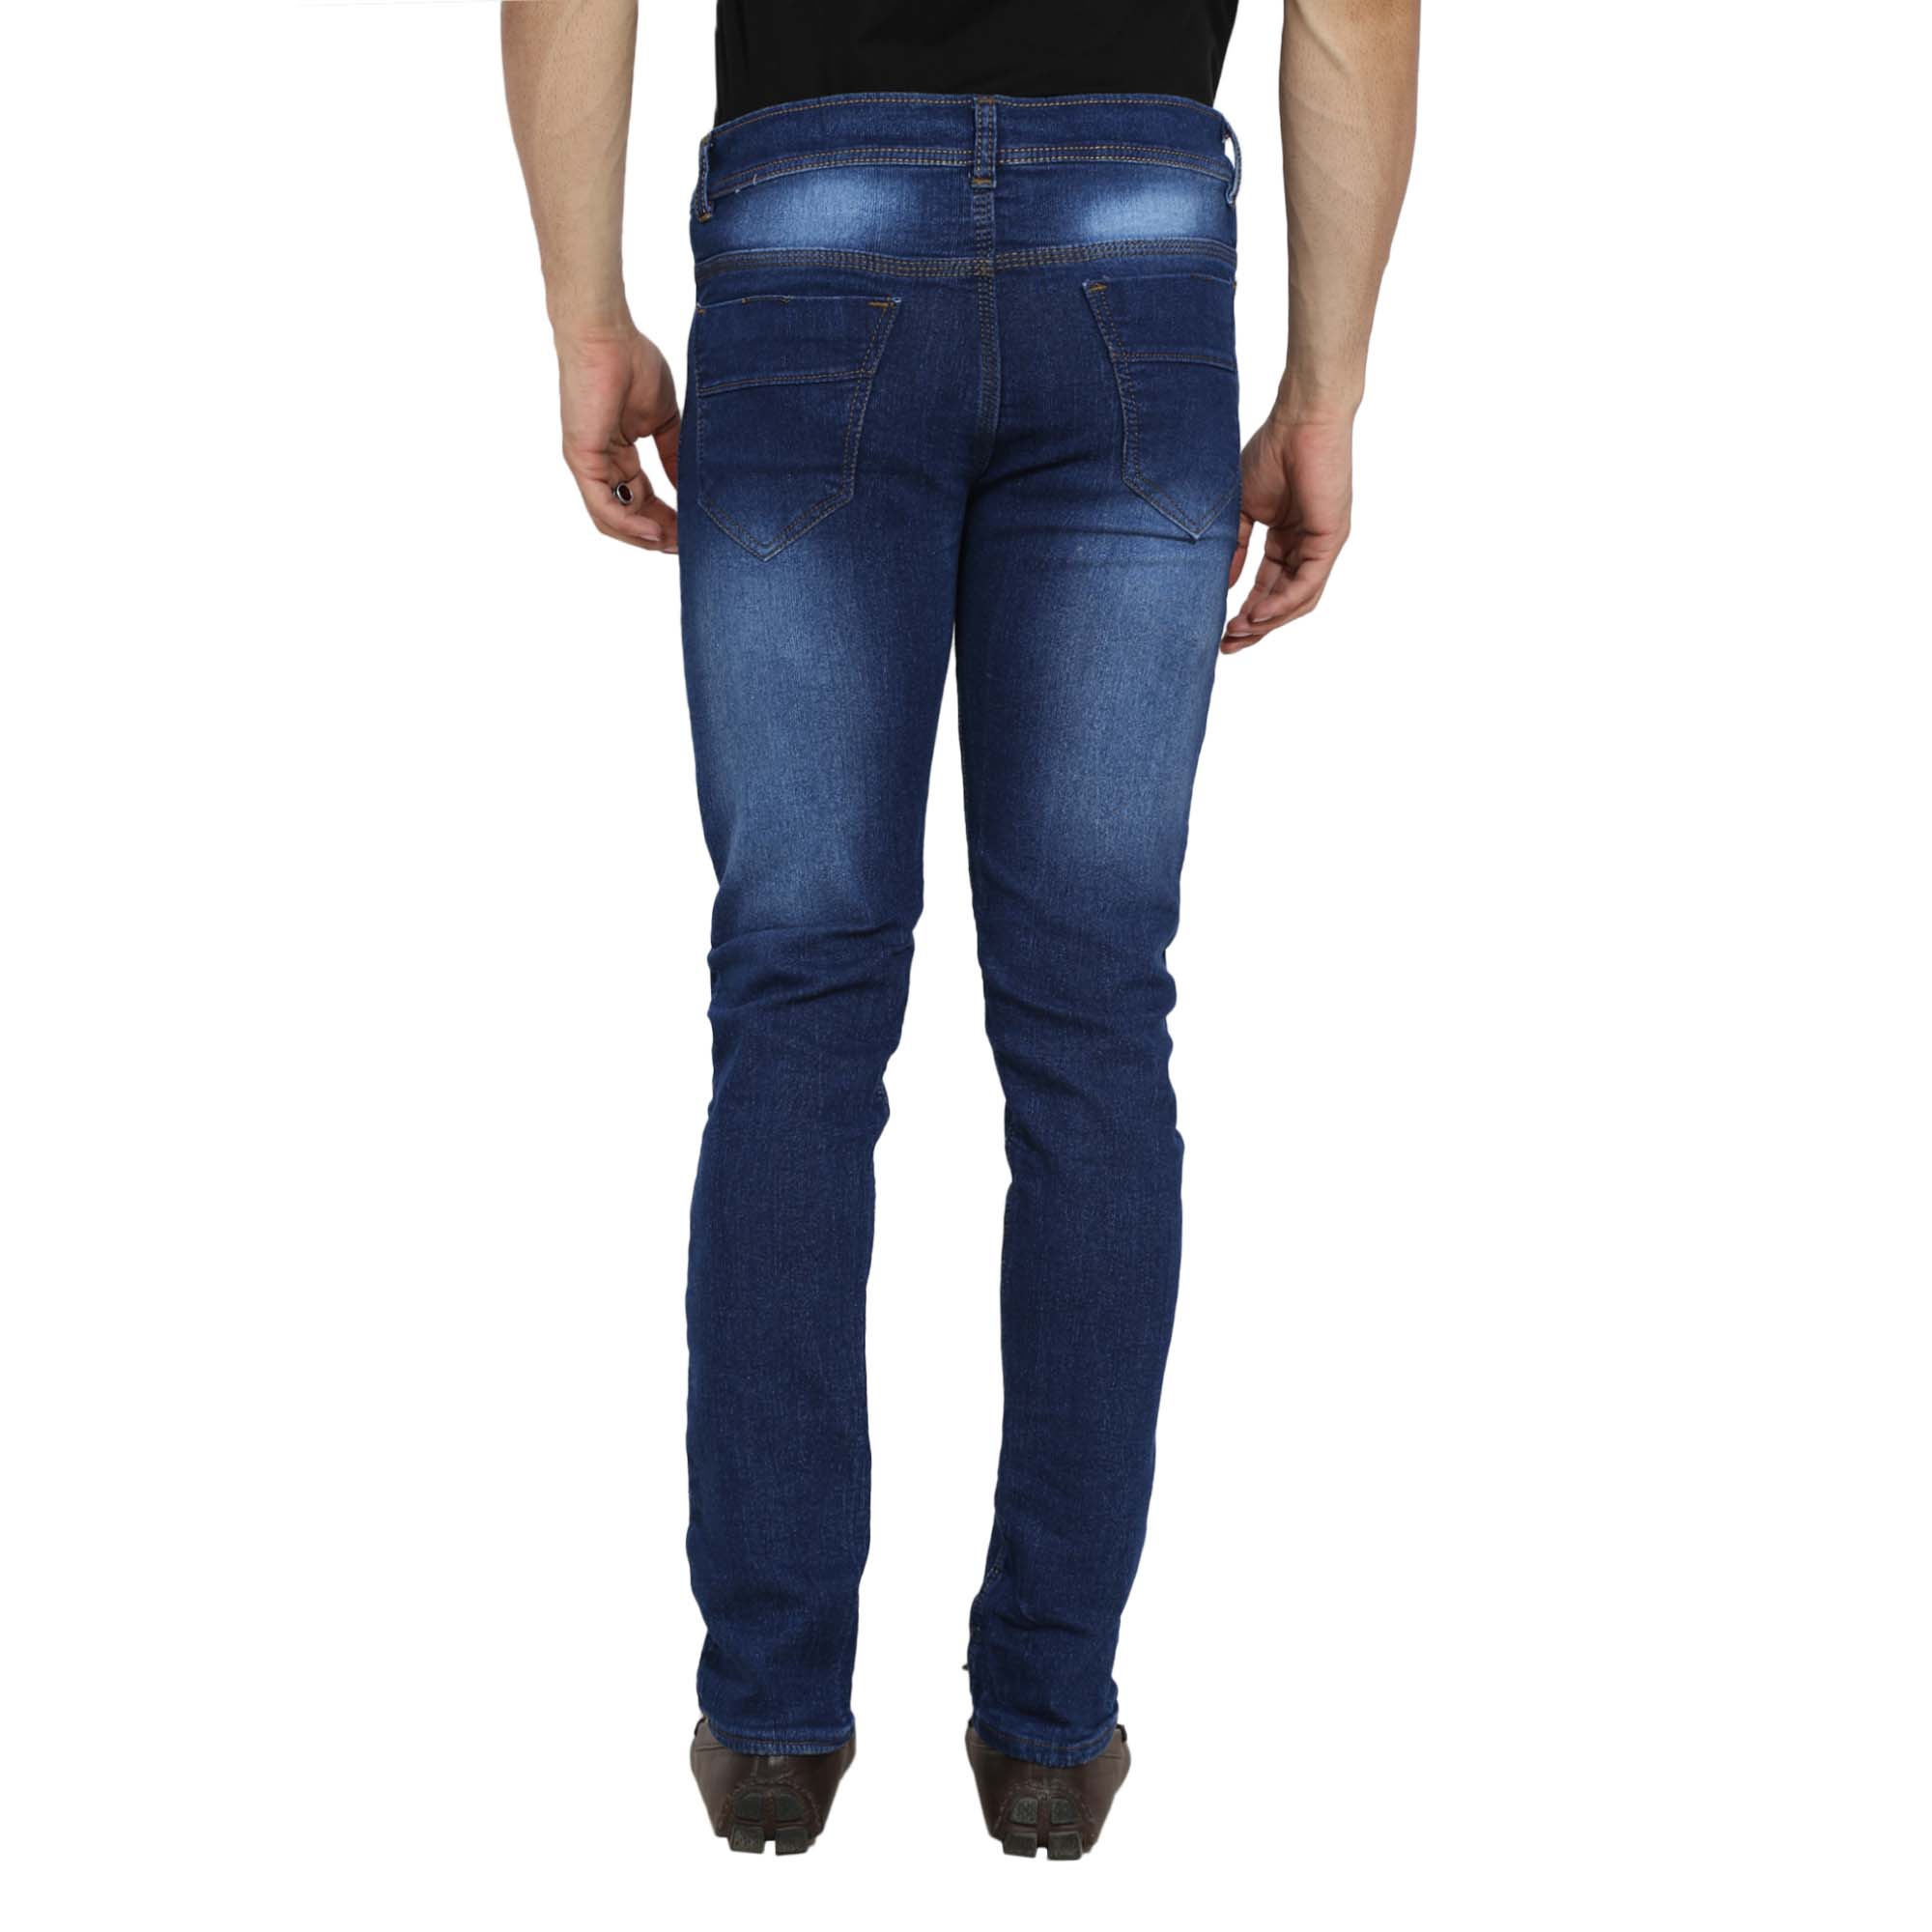 Buy Spain Style Men's Slim Fit Blue Jeans Online @ ₹659 from ShopClues